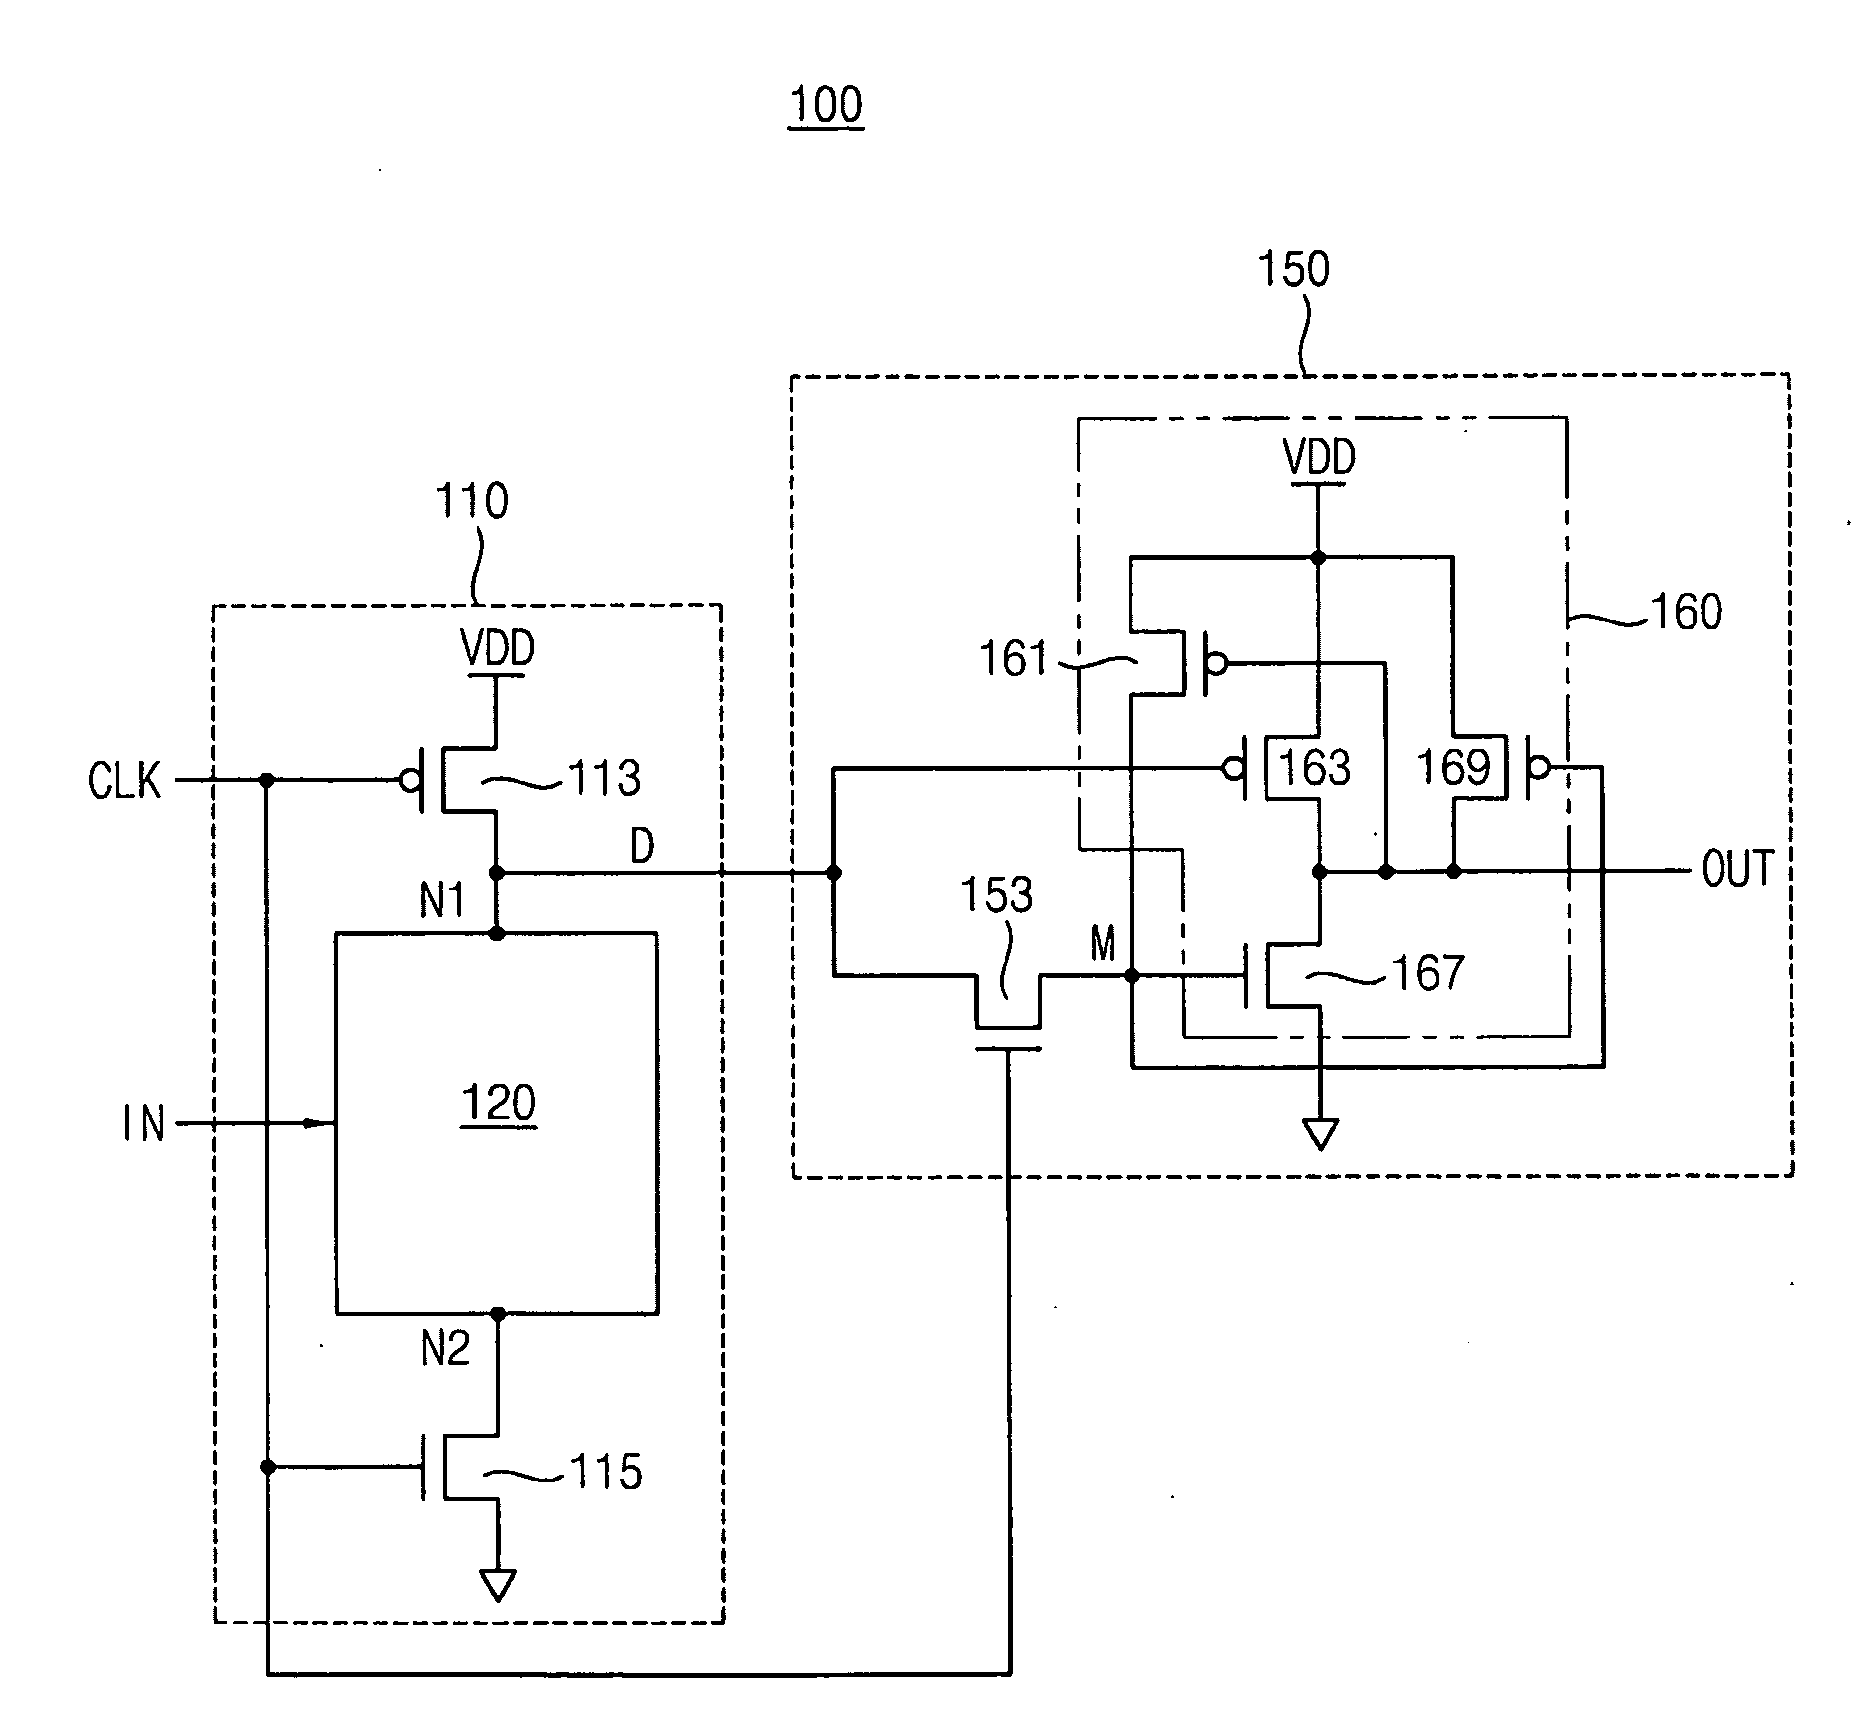 Domino logic circuit and pipelined domino logic circuit